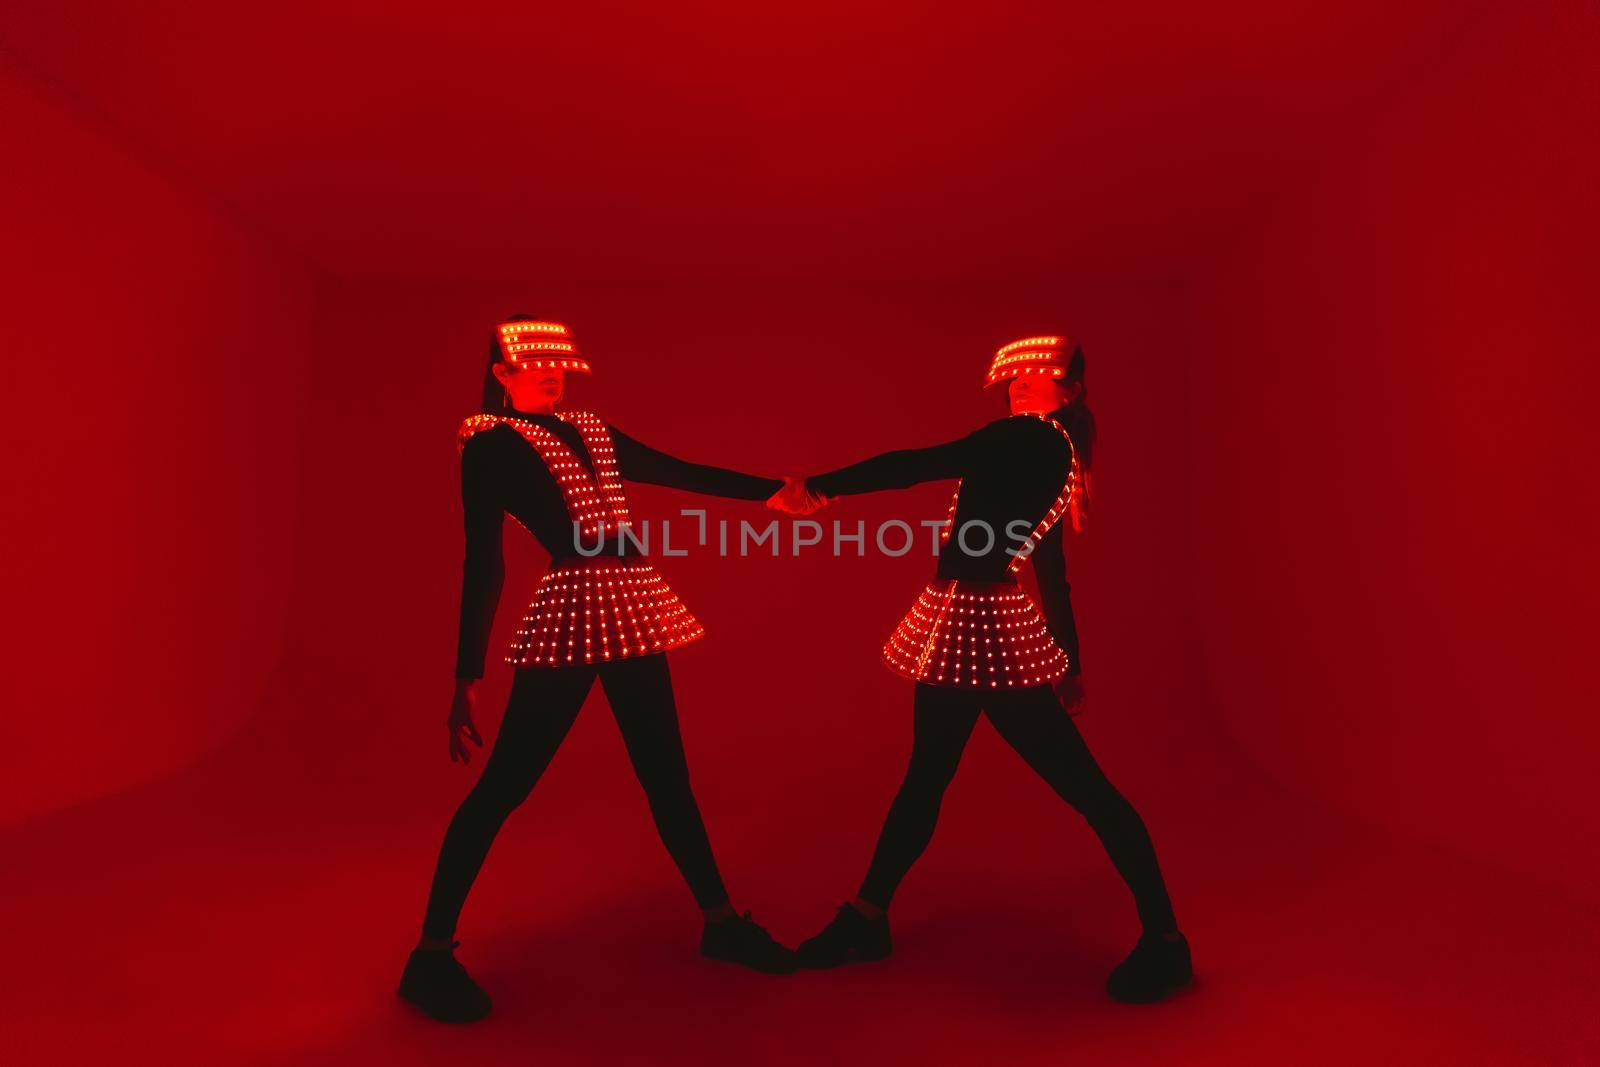 Two disco dancers move in UV costumes.